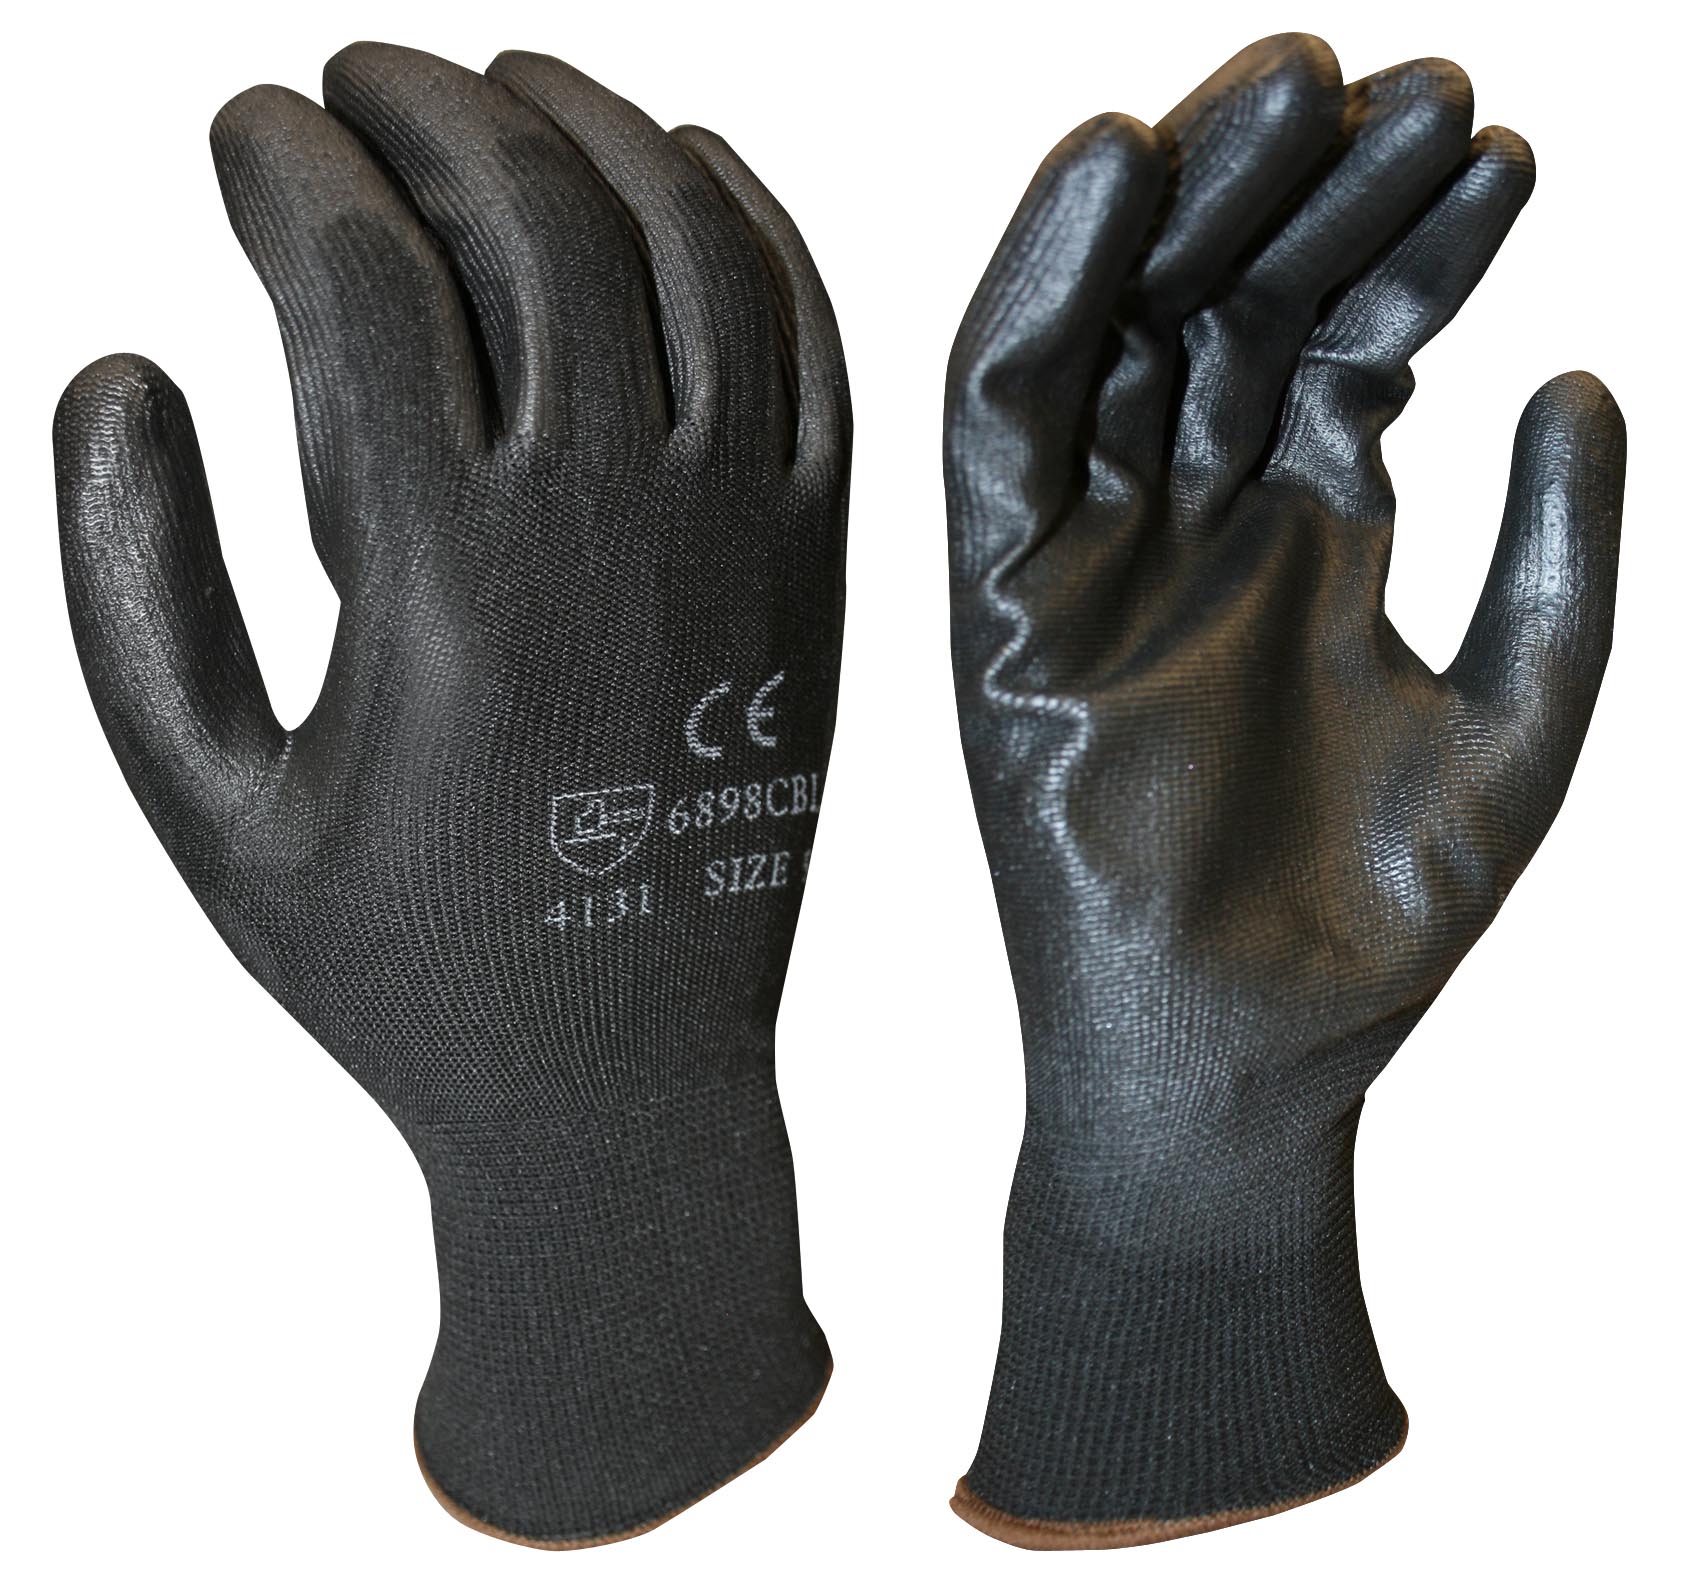 13 ga Black Polyester/Black PU coating, 12 dz